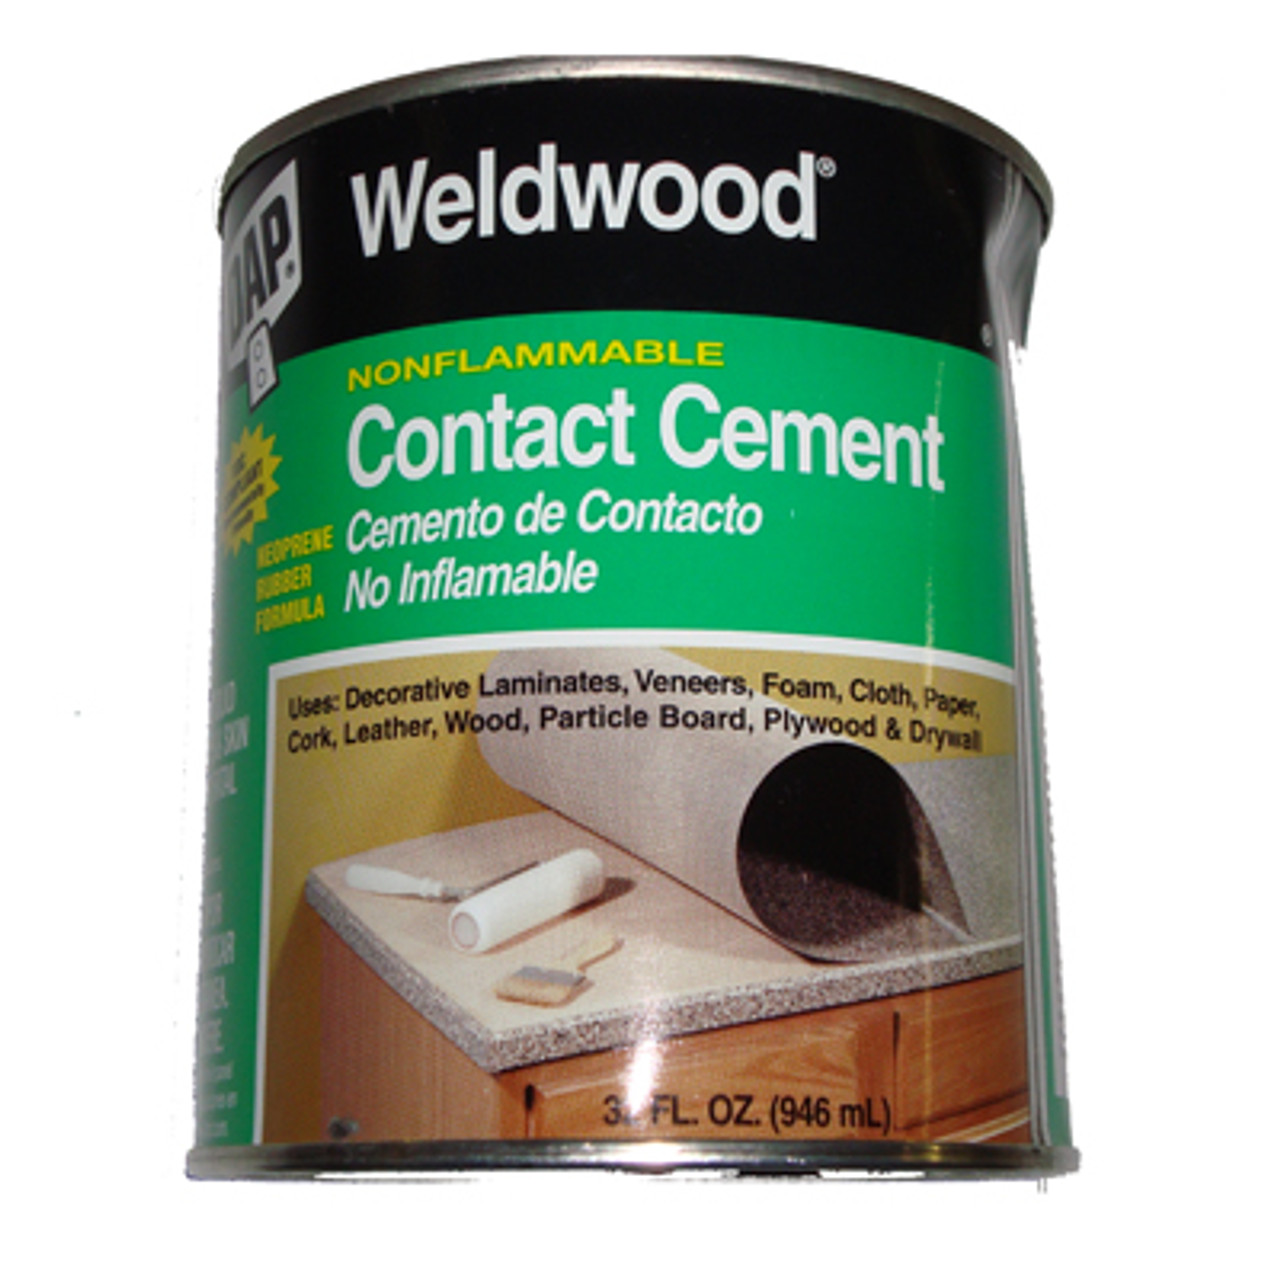 Dap Weldwood Original Contact Cement - Weldwood Non-Flammable